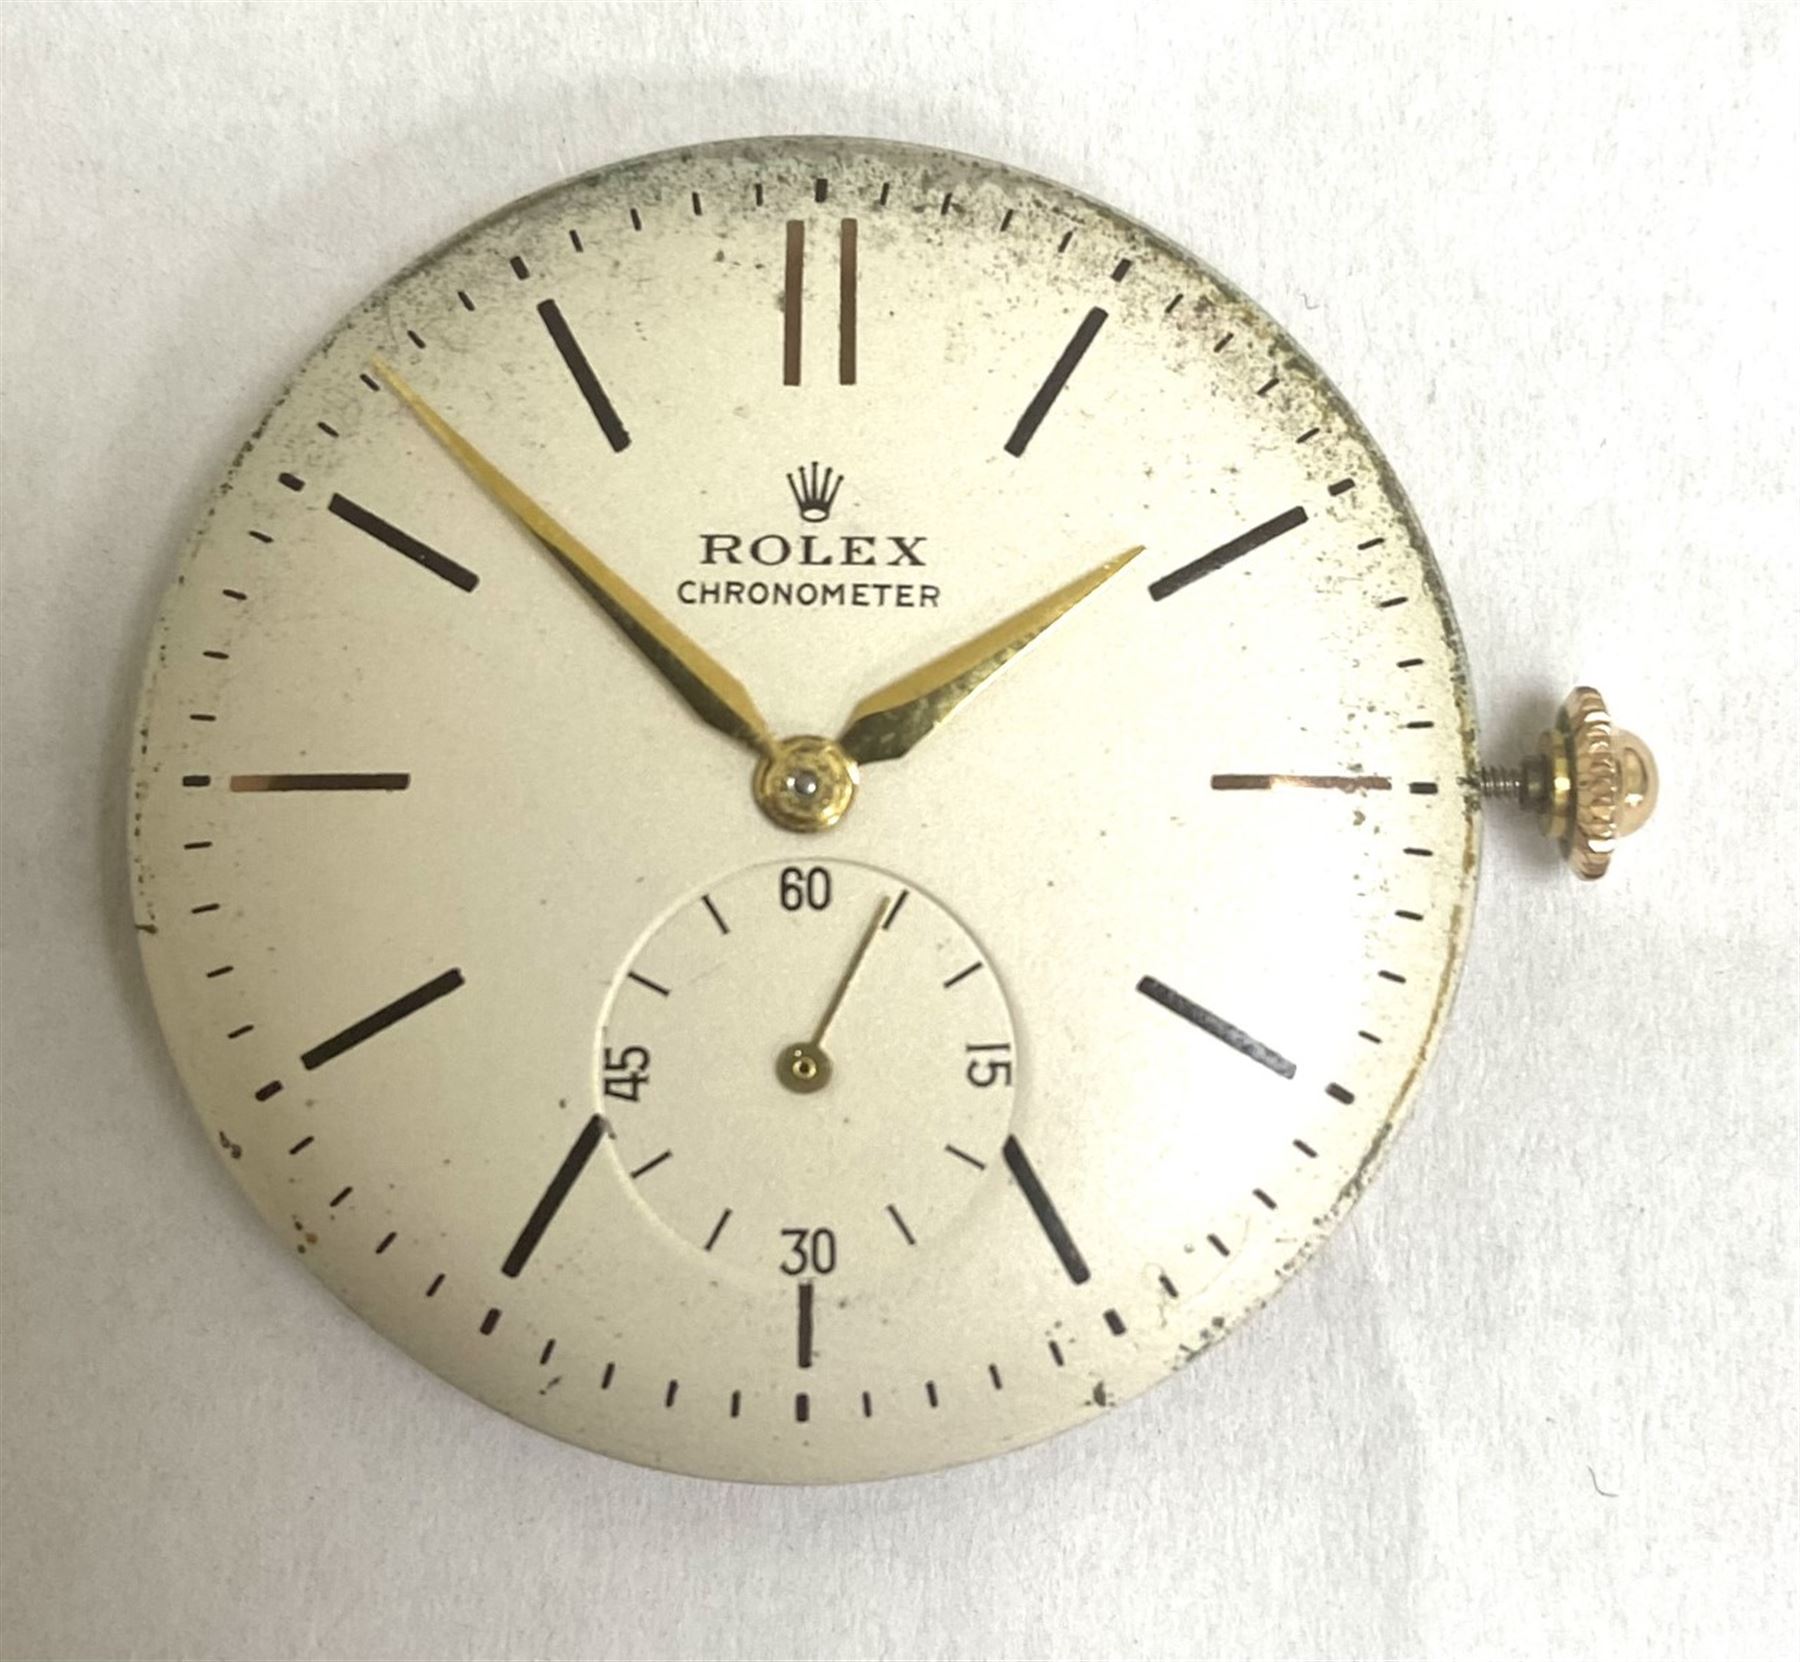 Rolex Precision Metropolitan Chronometer - Image 4 of 8